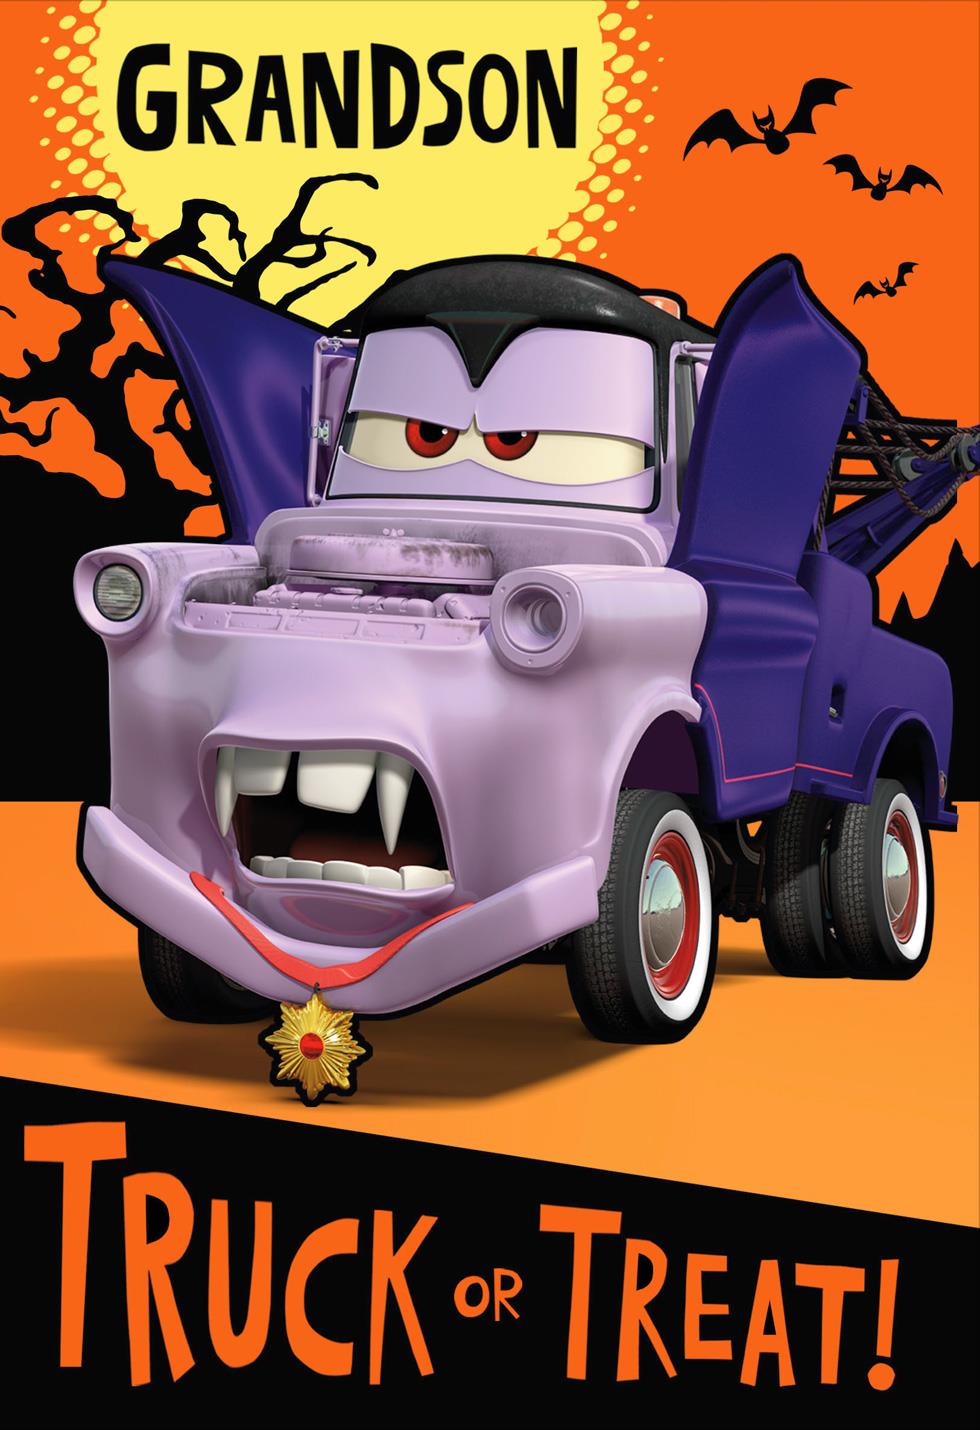 Disney Pixar Cars Mater as Vampire Halloween Card for 